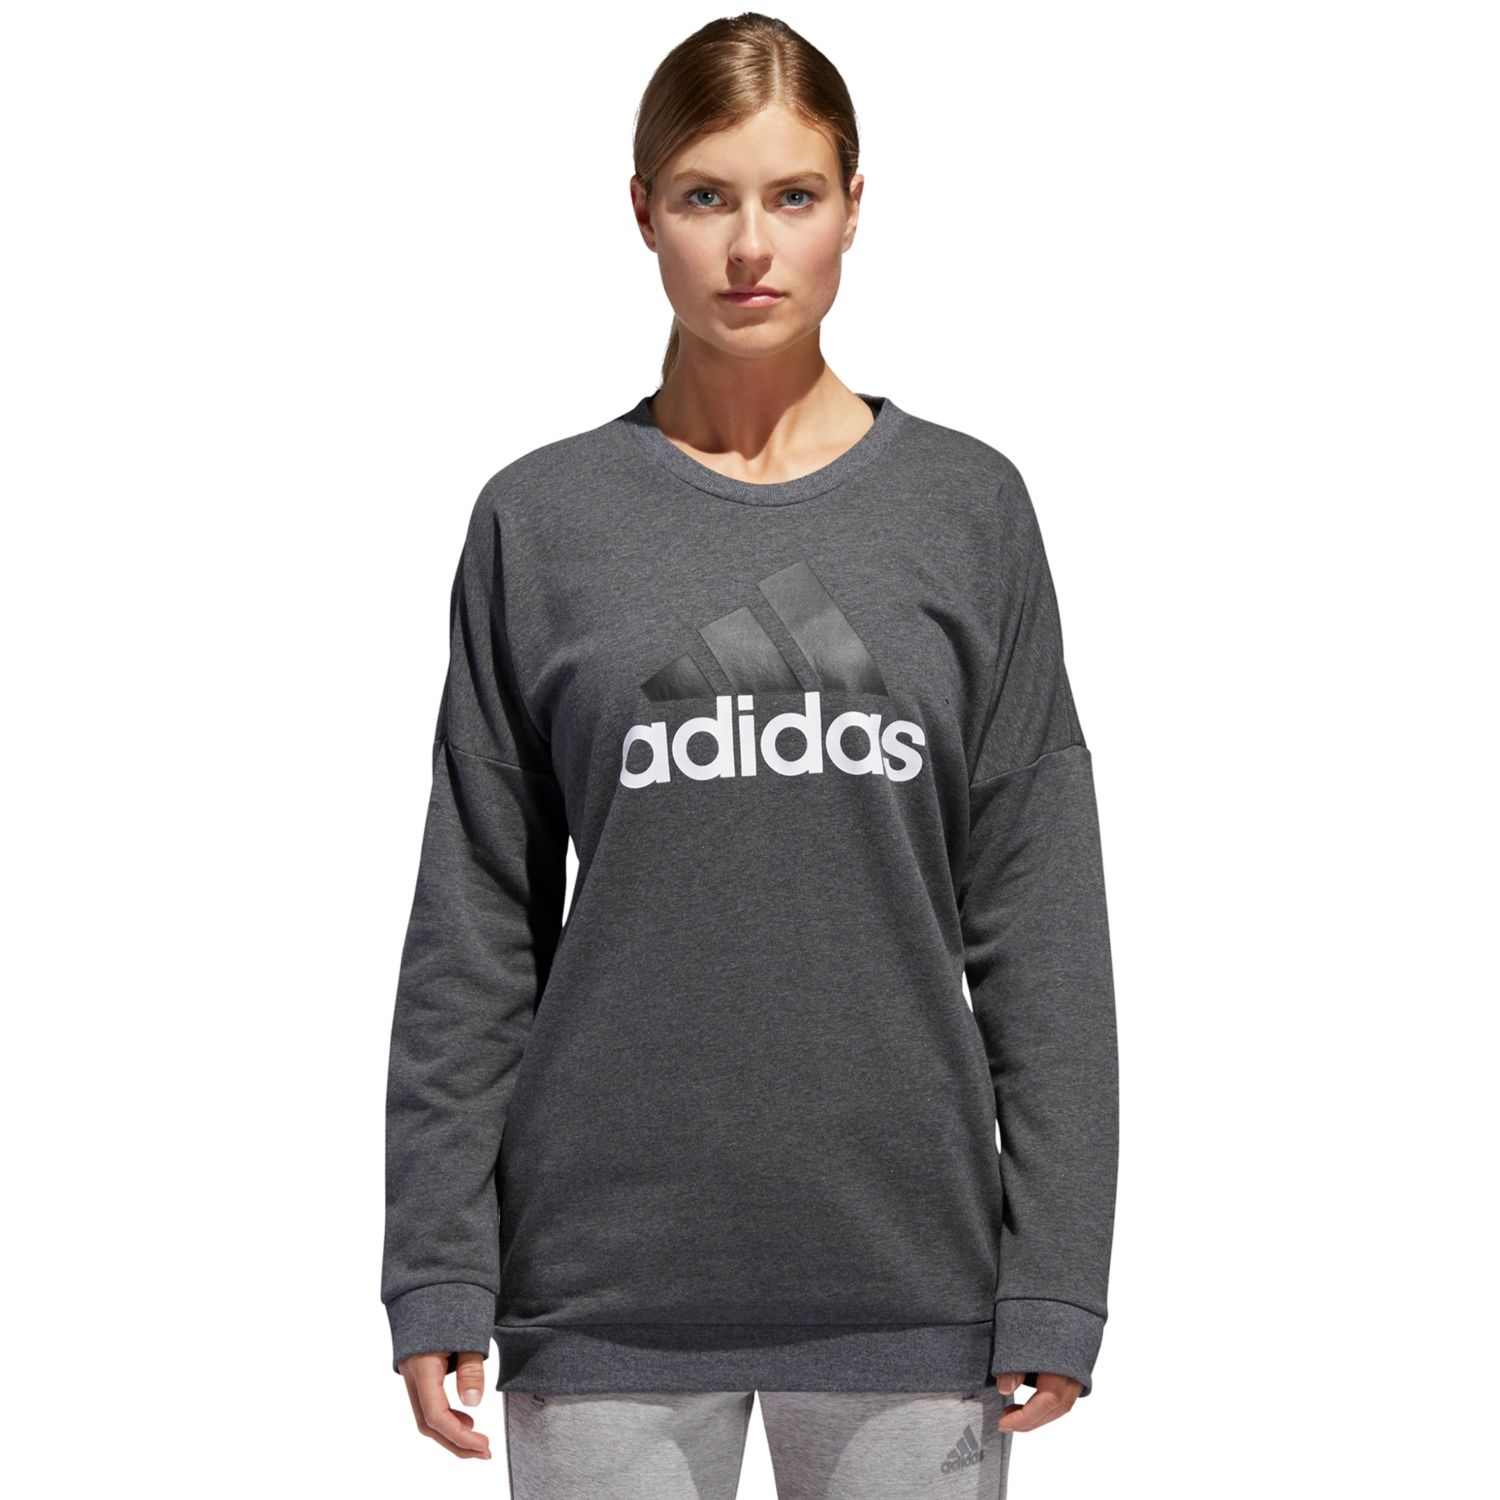 adidas womens oversized sweatshirt